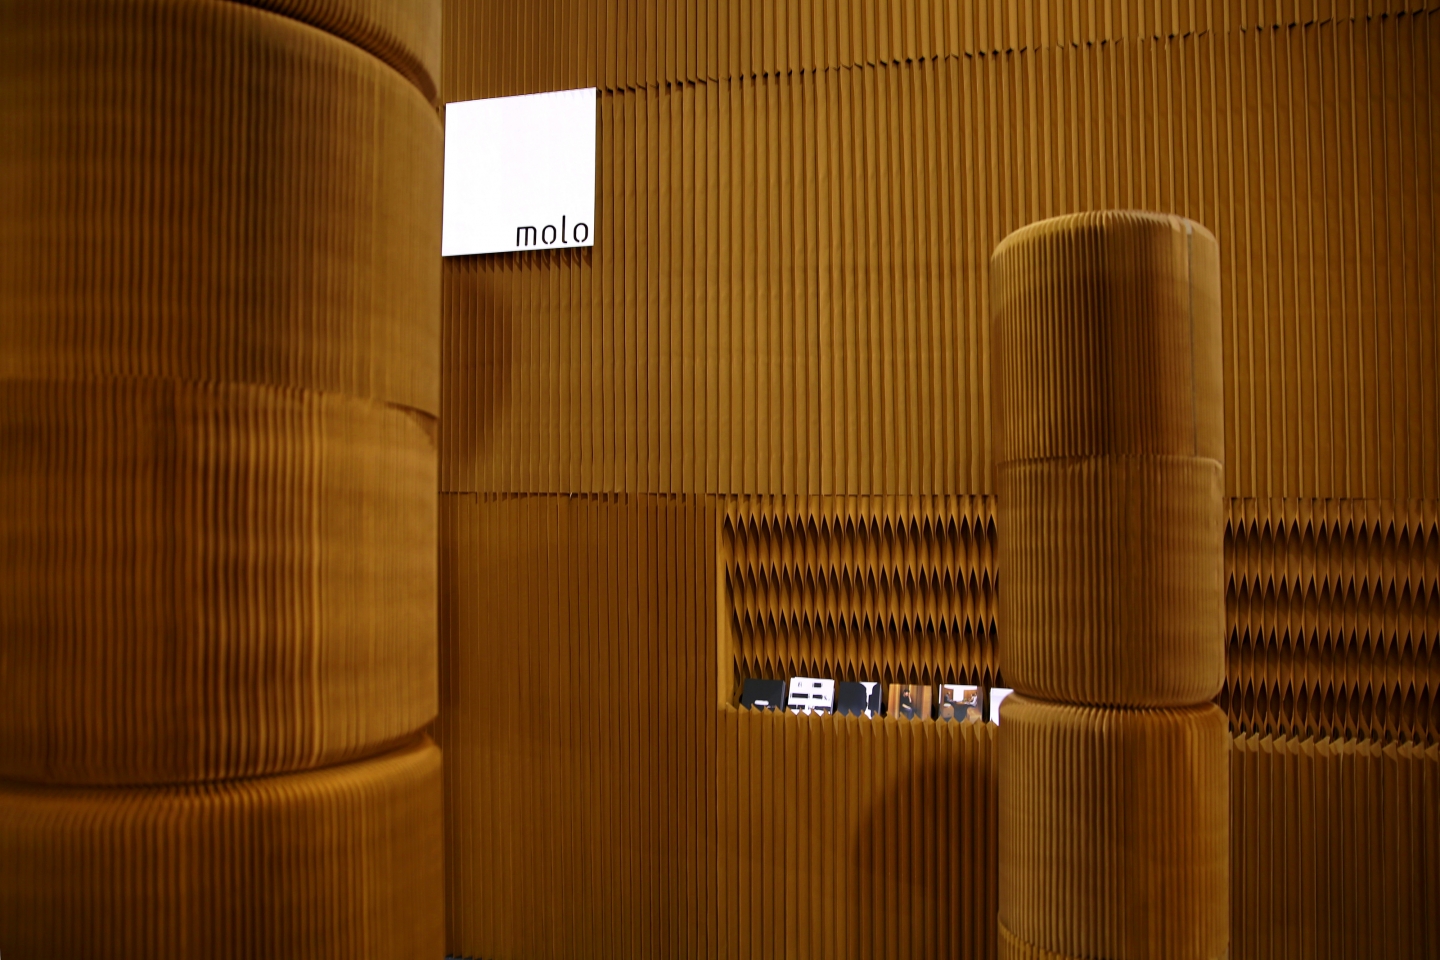 molo's installation at Maison & Objet in Paris, 2016 - paper furniture by molo